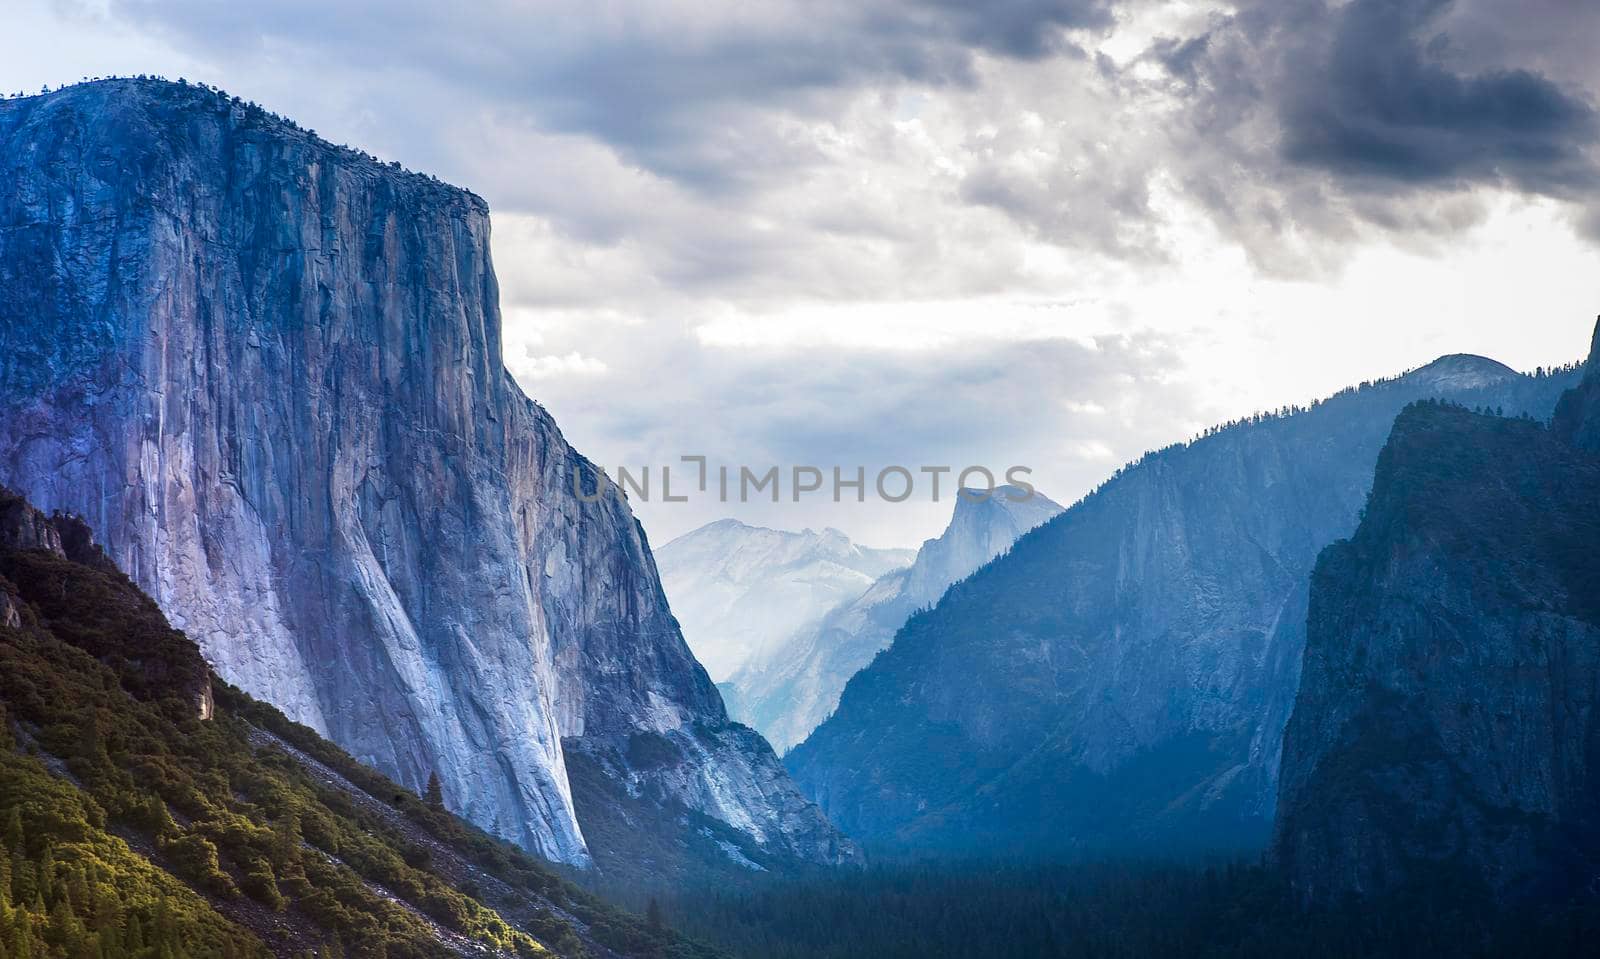 El Capitan, Yosemite national park by photogolfer